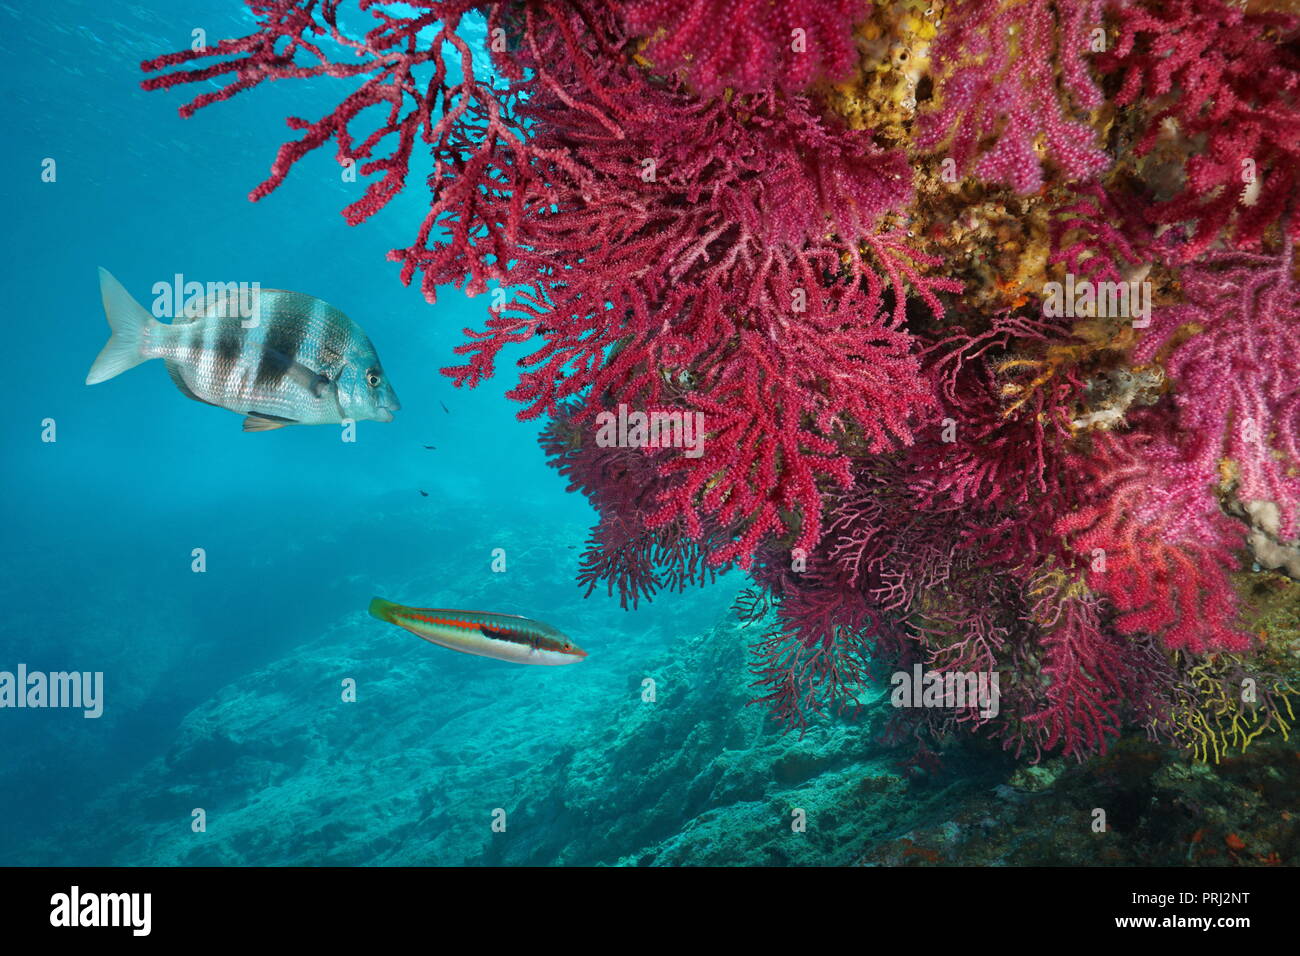 Red gorgonian soft coral, Paramuricea clavata, with fish underwater in the Mediterranean sea, Cap de Creus, Costa Brava, Spain Stock Photo